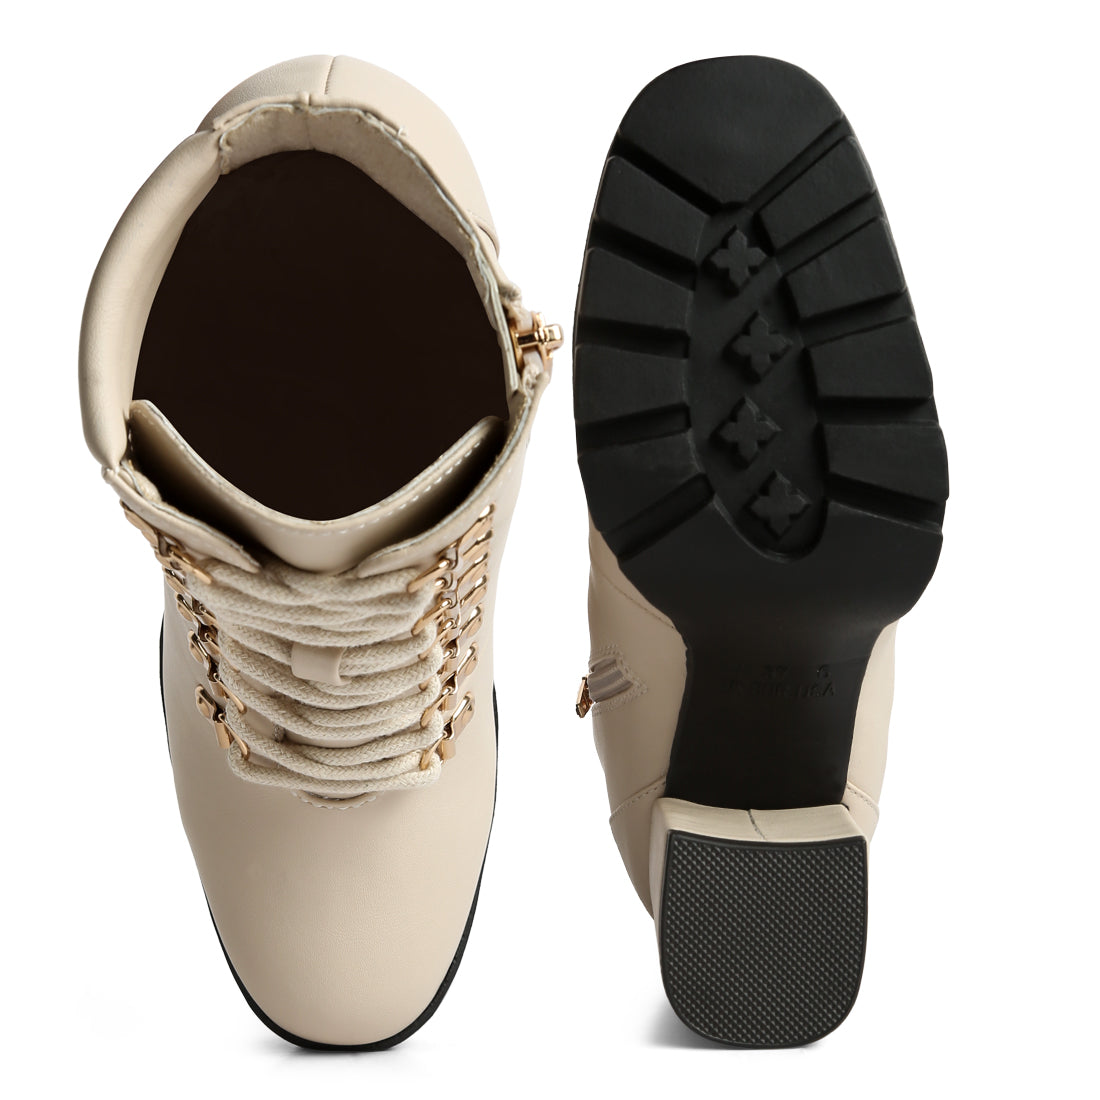 lace up block heel boots#color_beige